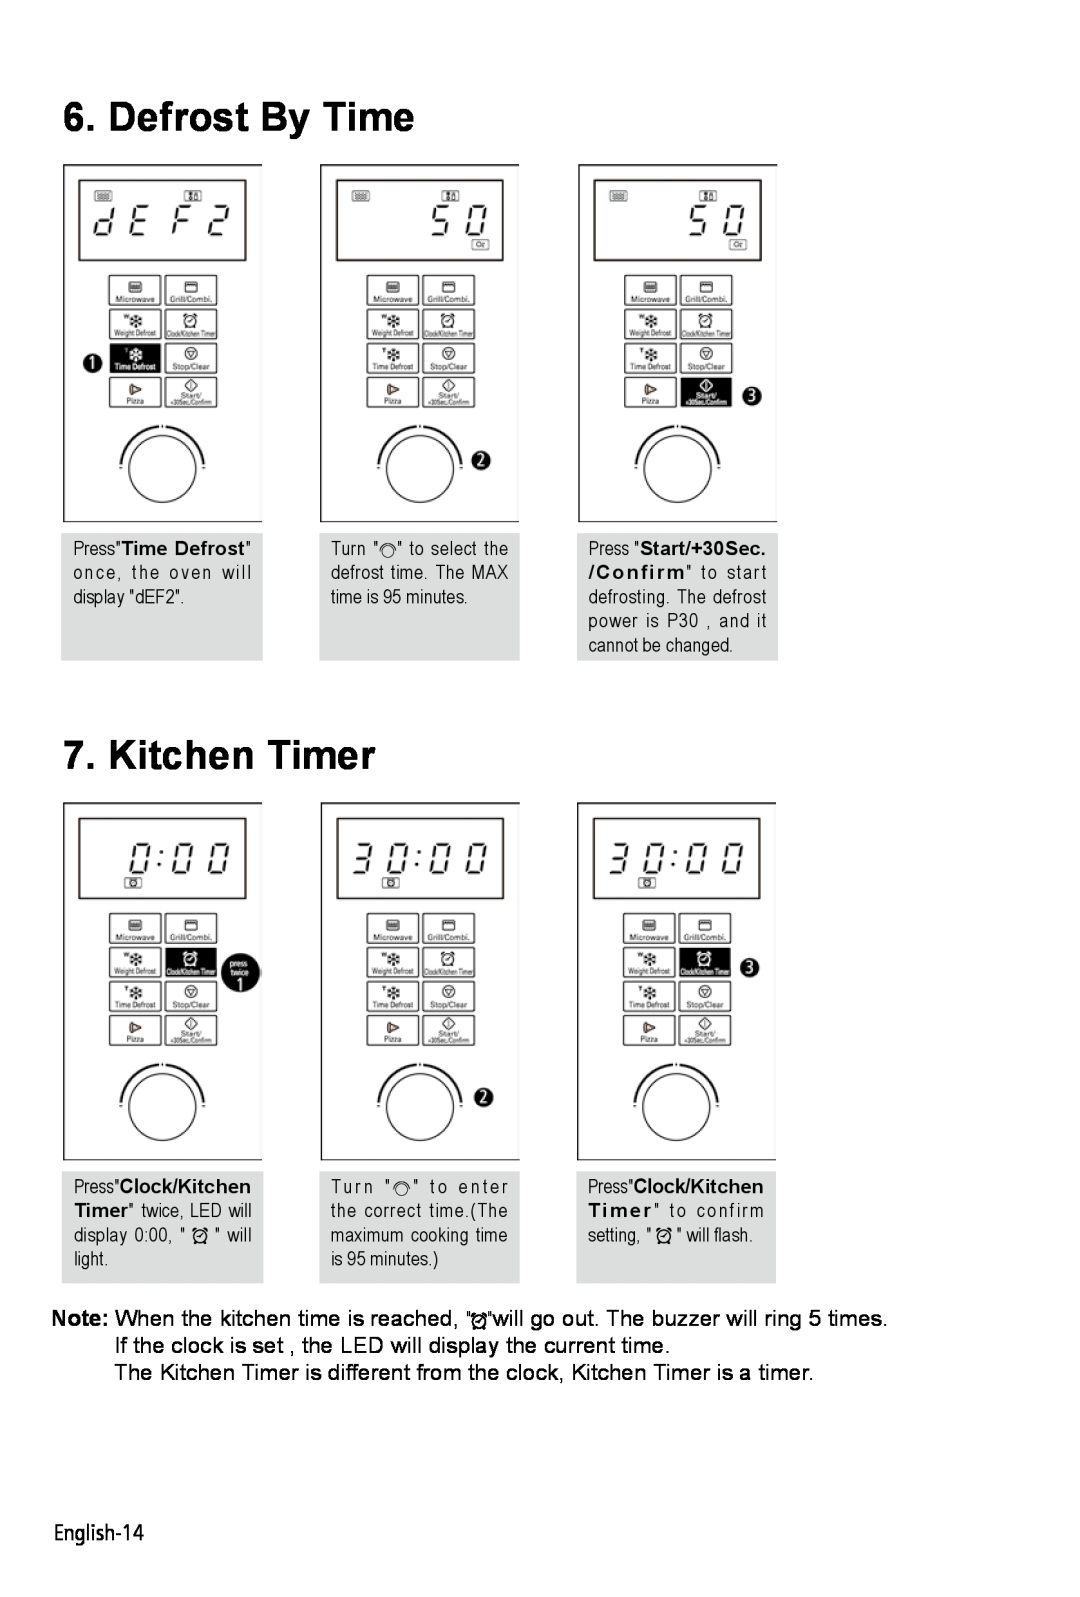 West Bend AG028PLV manual Defrost By Time, Kitchen Timer 